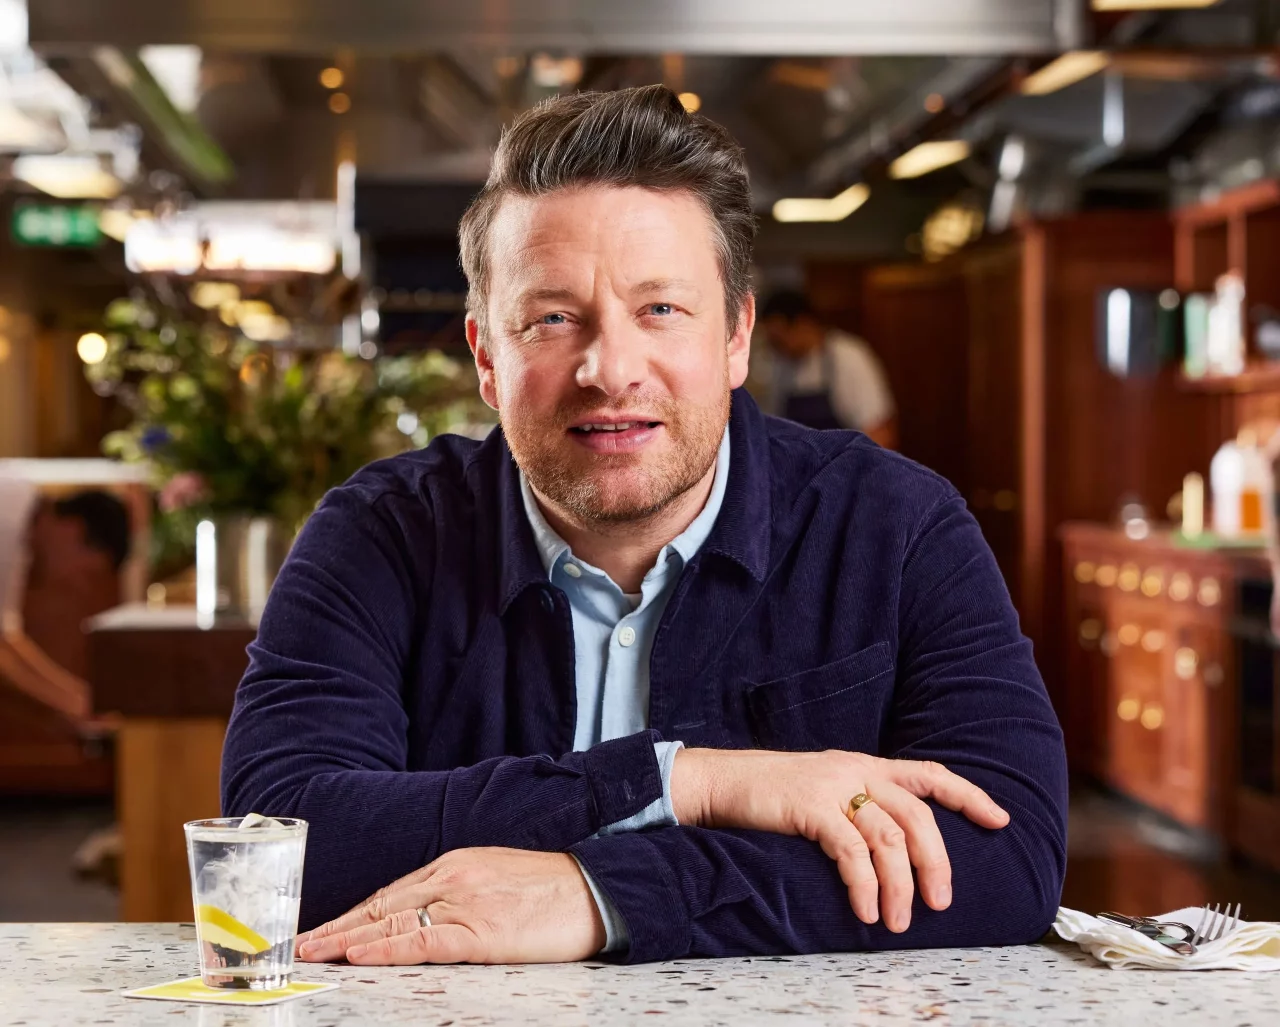 Jamie Oliver's businesses notch up higher profits after £1 Wonders TV  success